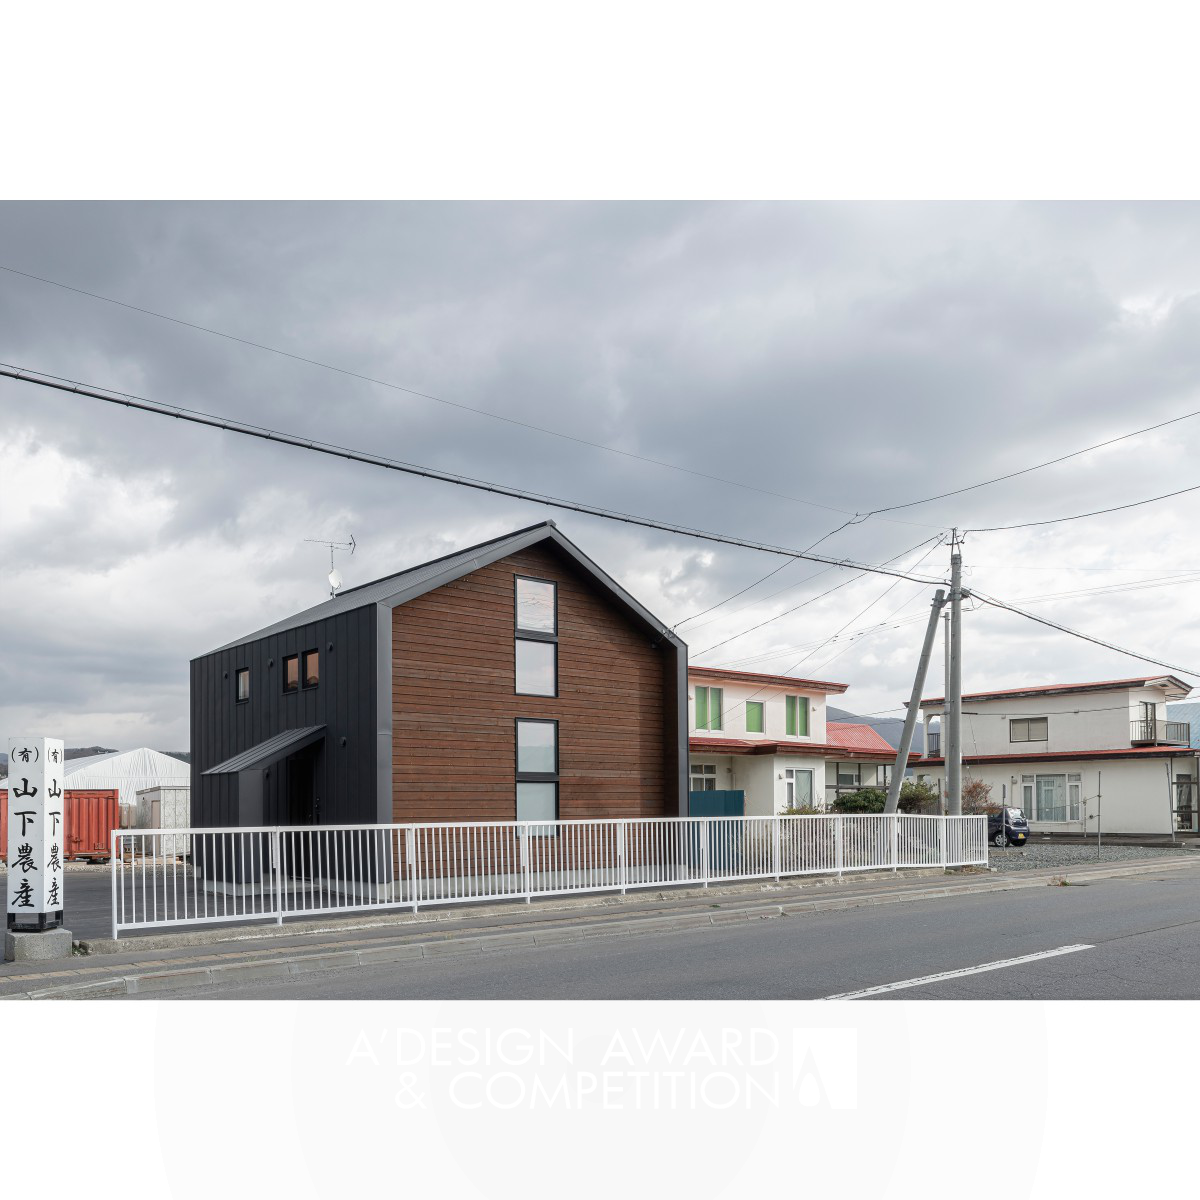 With Four Children House by Ryuji Yamashita